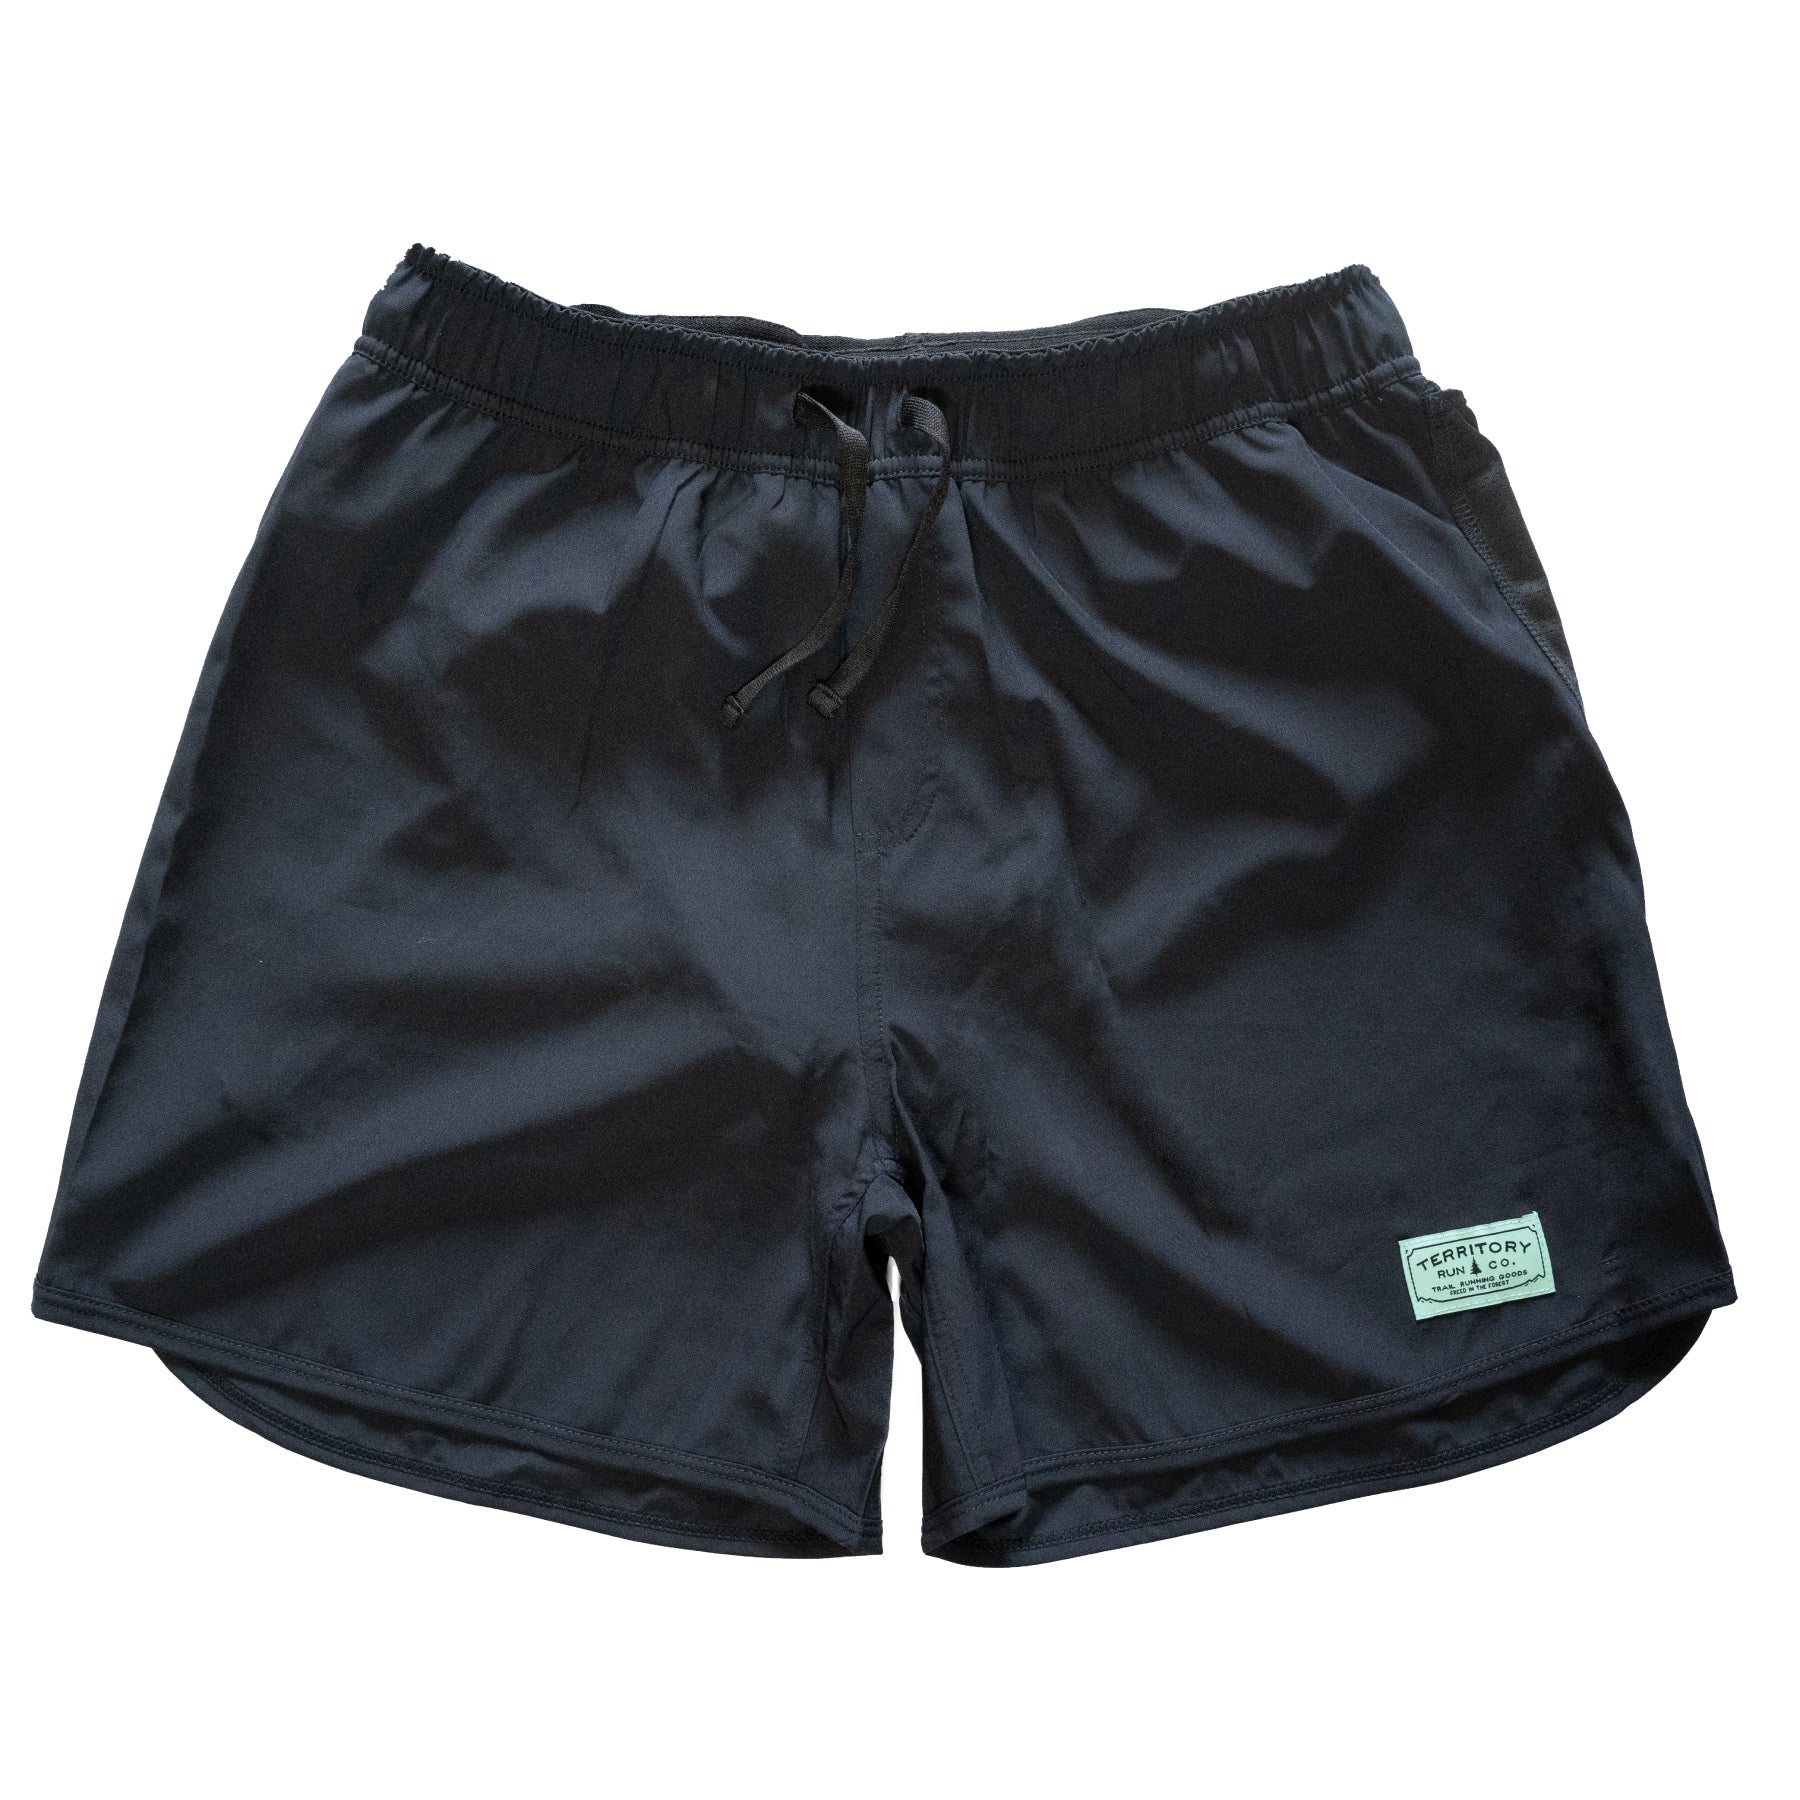 Shorts - All - Shop